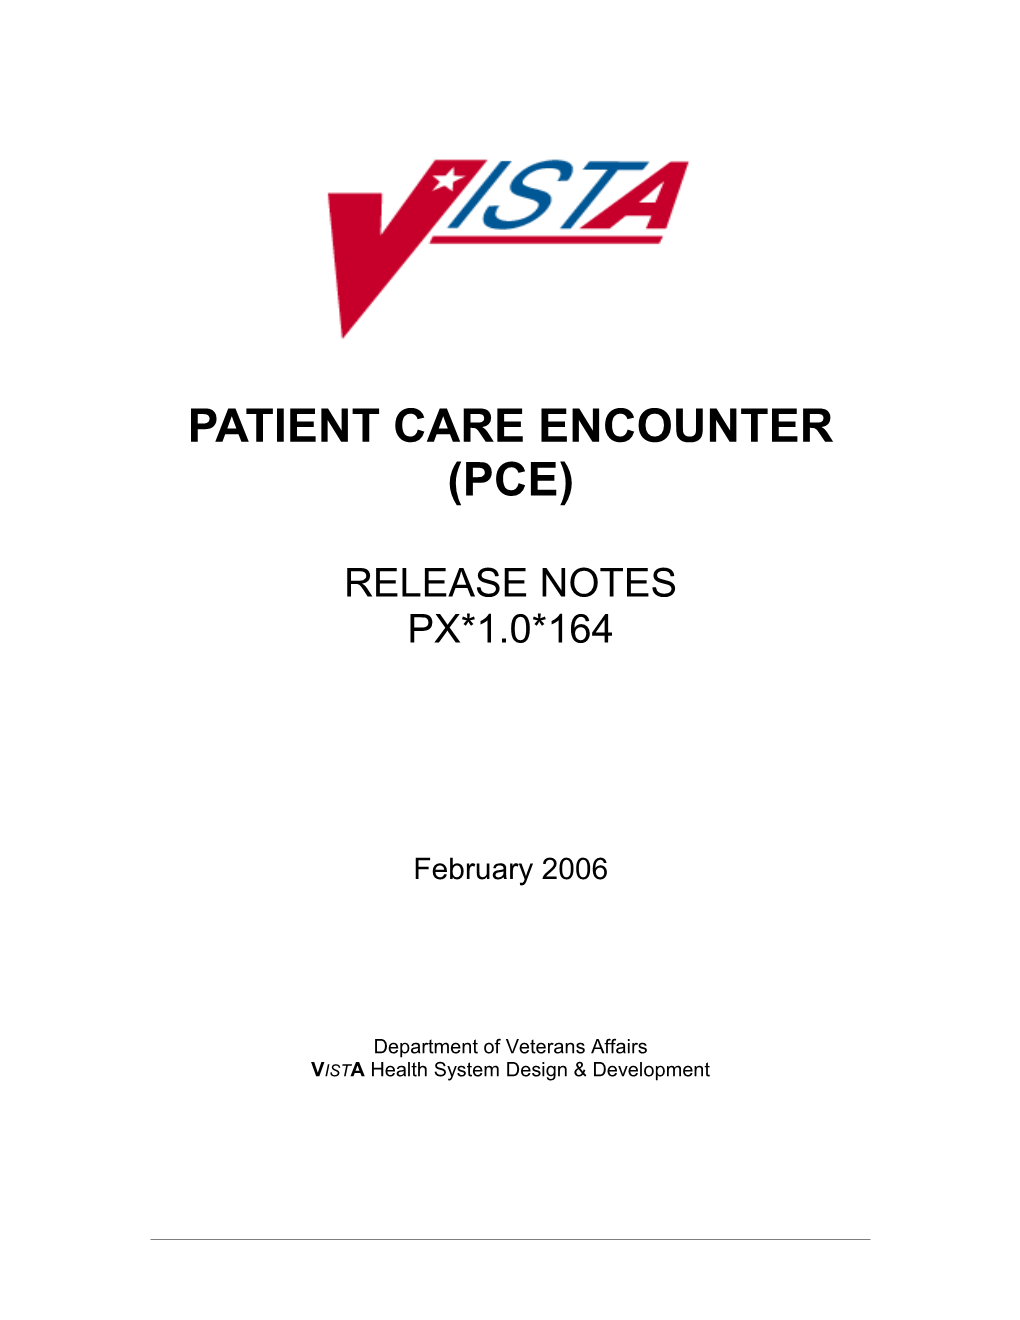 PATIENT CARE ENCOUNTER (PCE) Release Notes PX*1.0*164